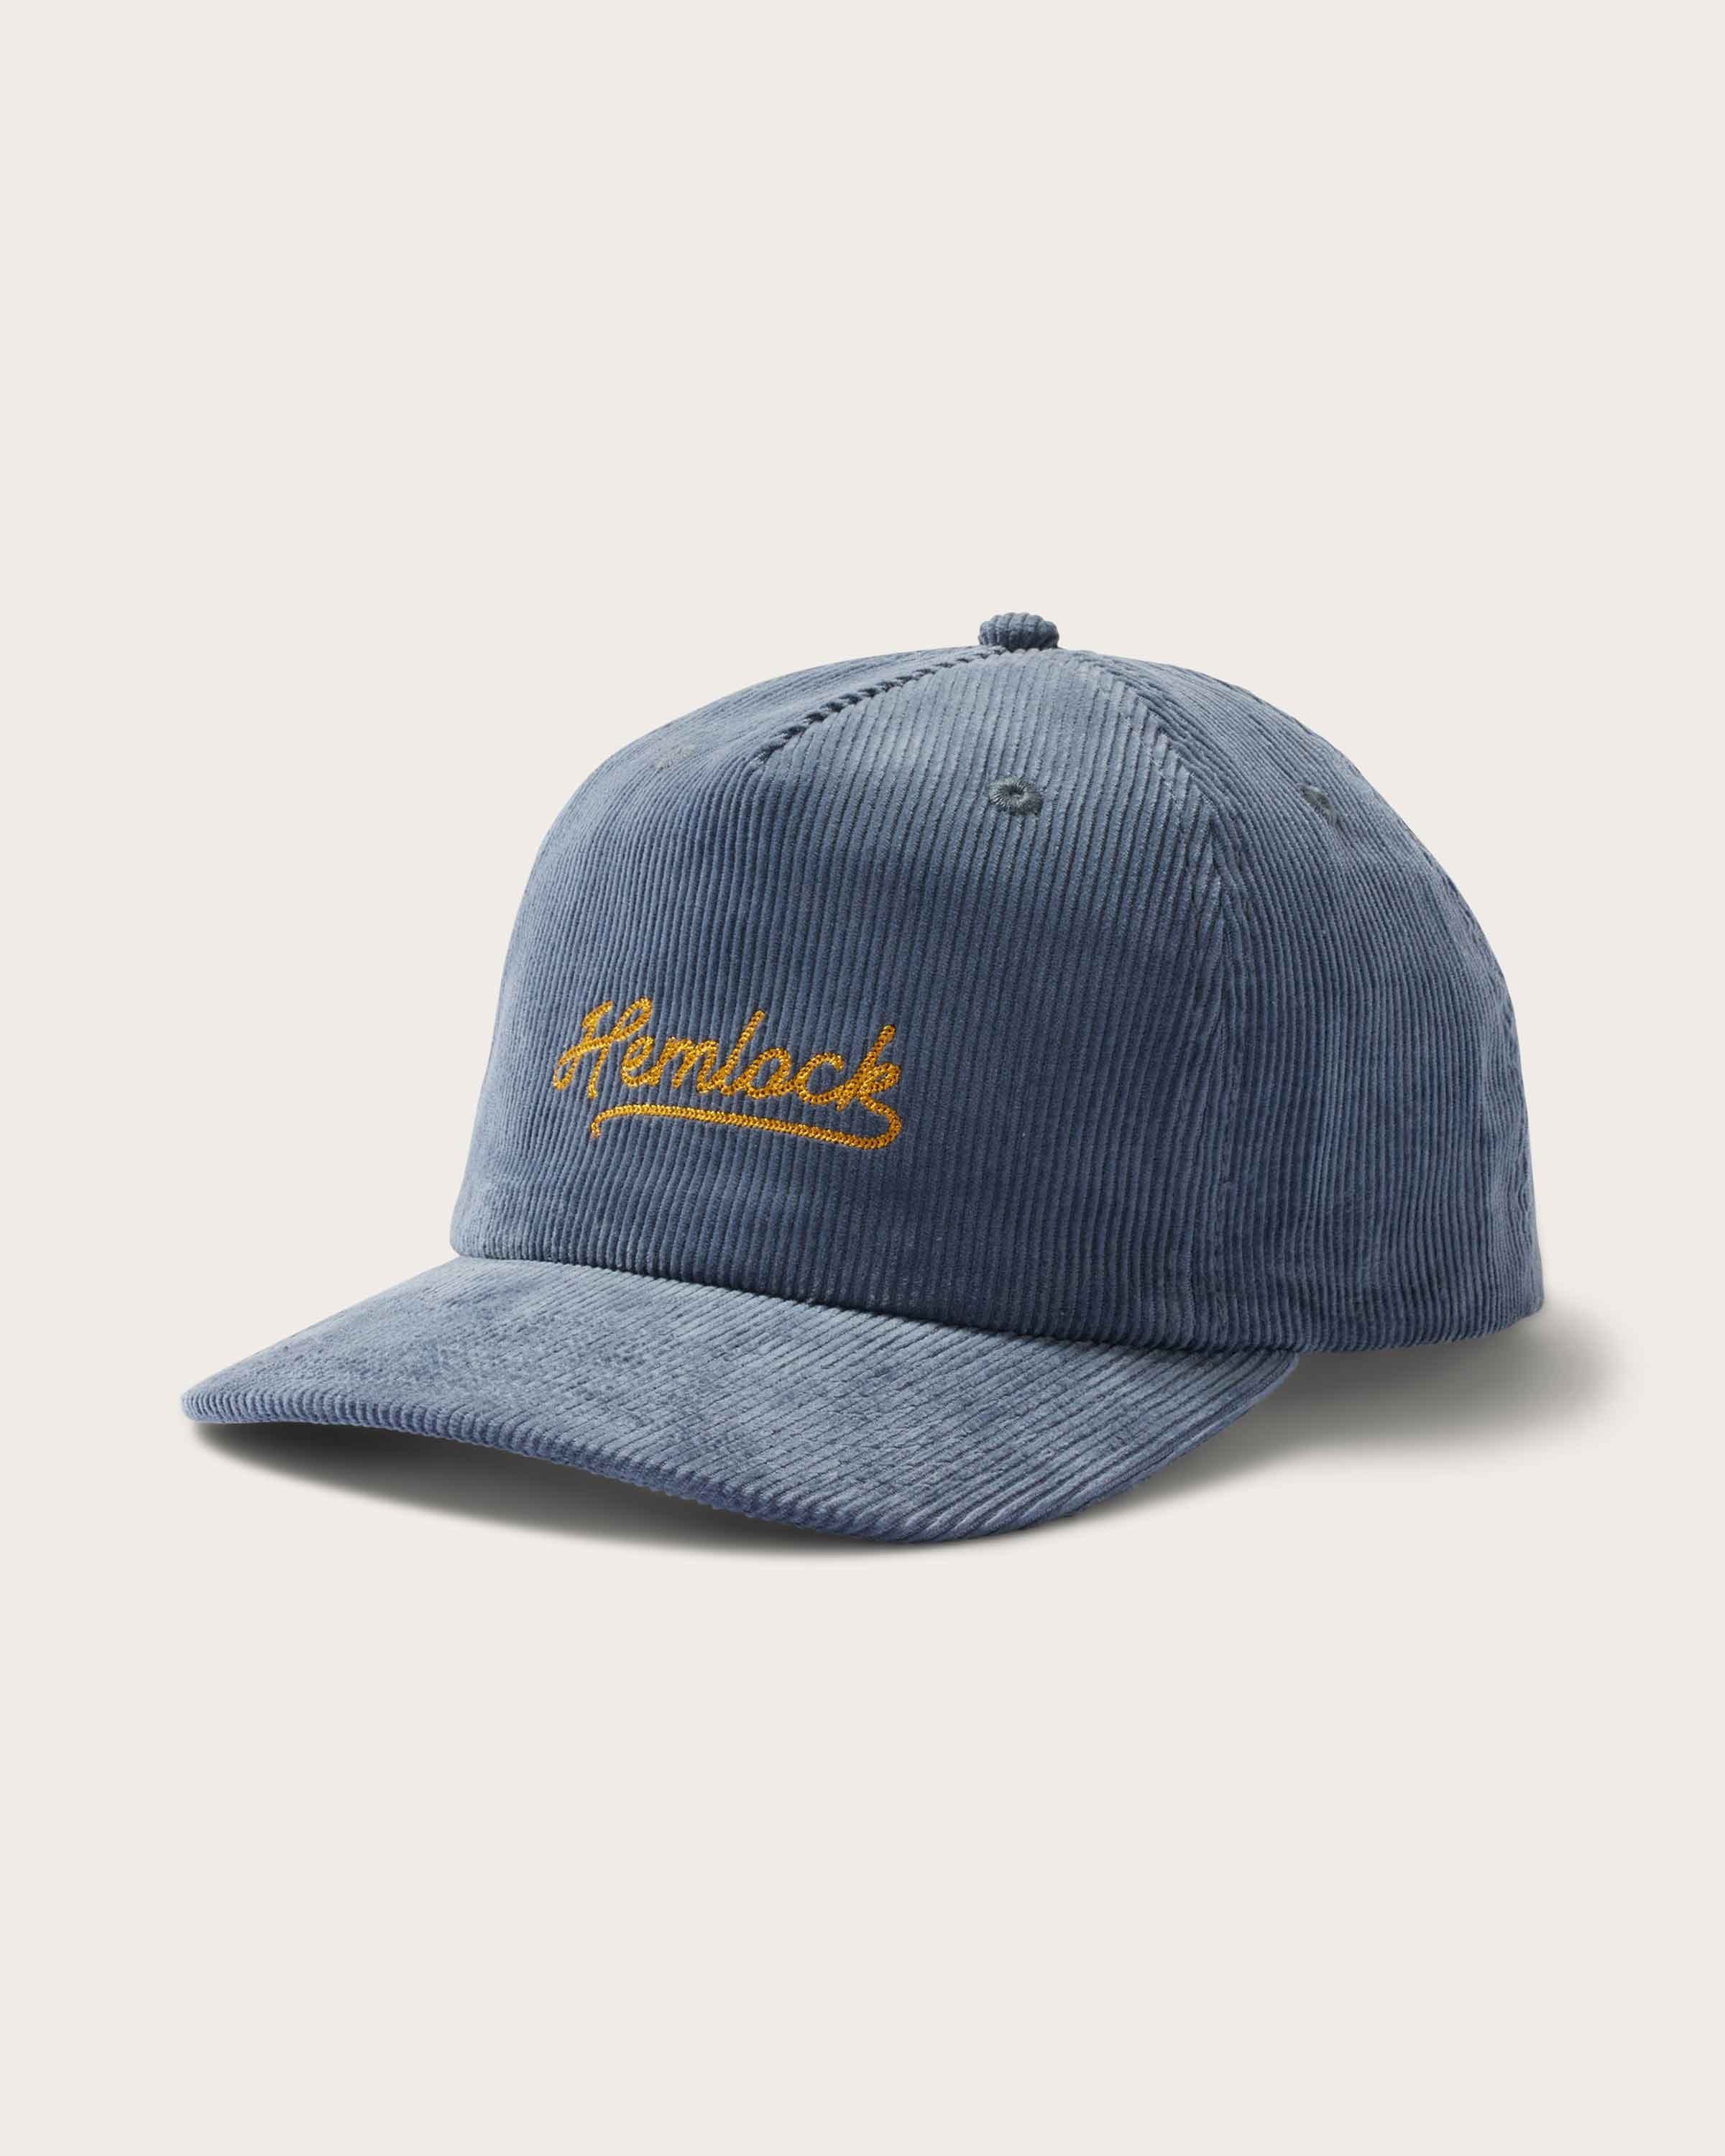 Wesley 5 Panel Hat in Dusty Blue - undefined - Hemlock Hat Co. Ball Caps